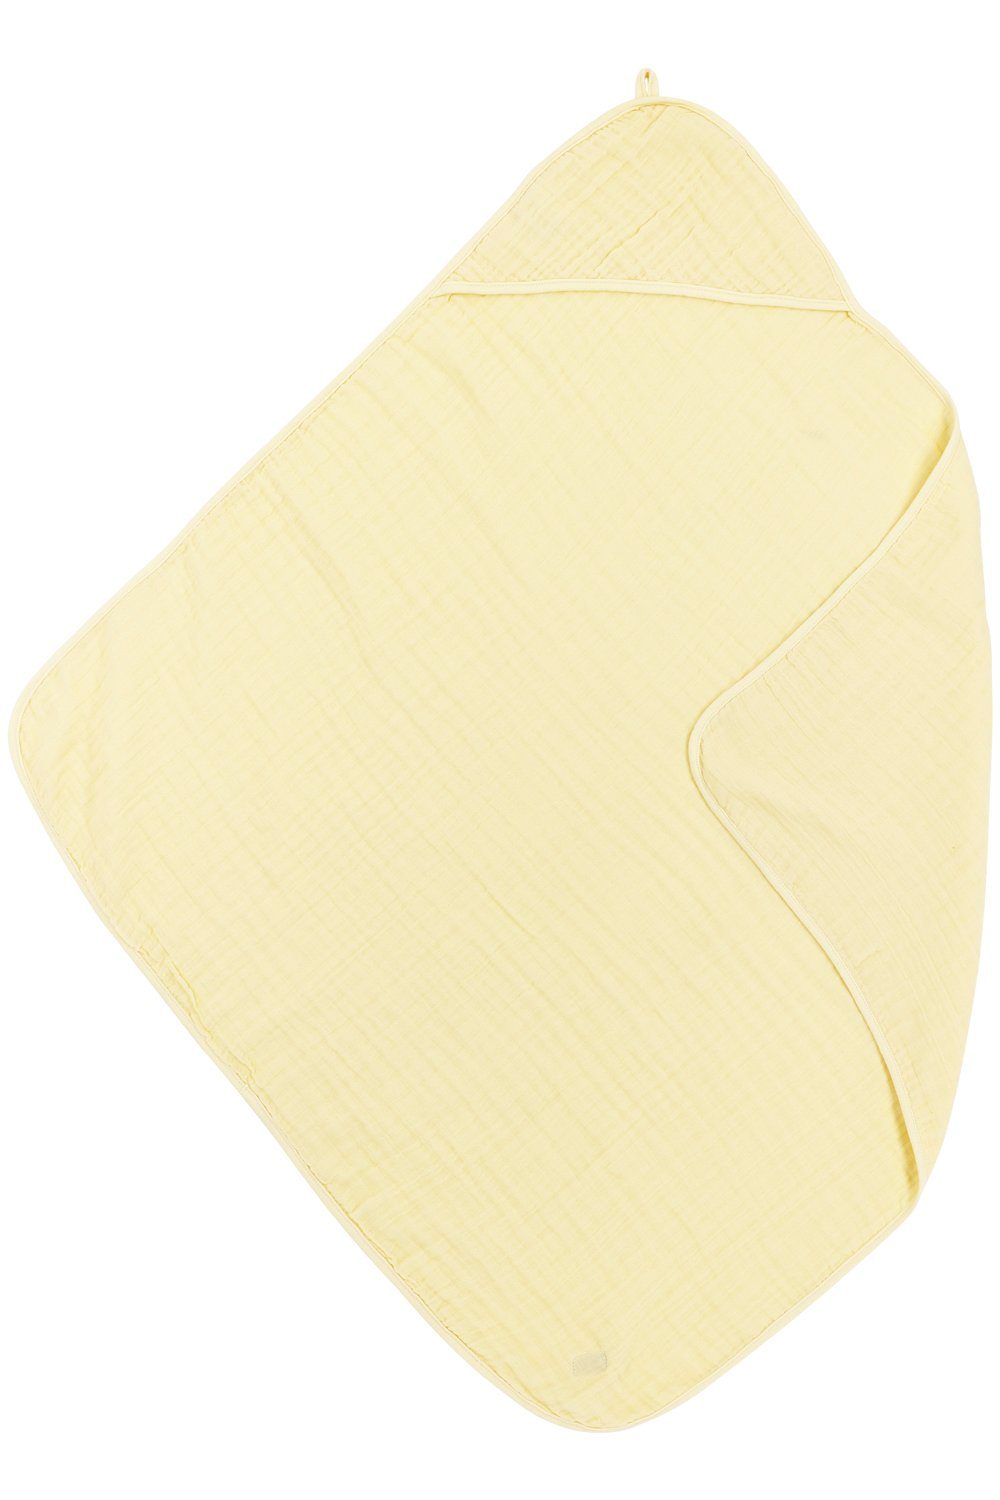 Meyco Baby Kapuzenhandtuch Uni Soft Yellow, Jersey (1-St), 80x80cm